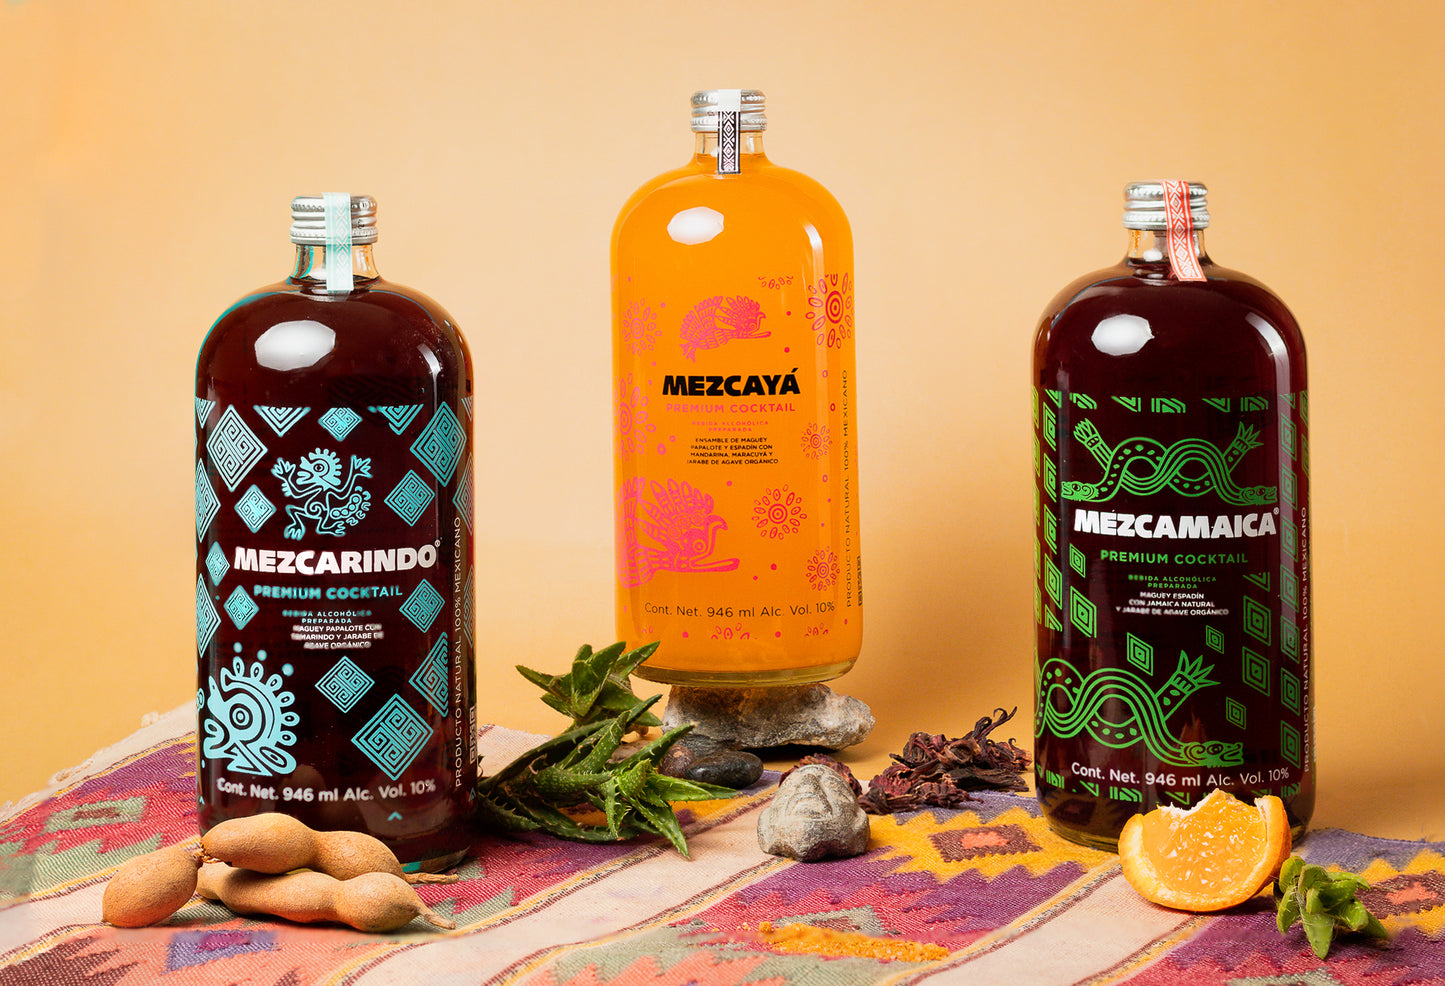 Combined box 946 ml 2 Mezcamaica, 2 Mezcaya, 2 Mezcarindo 6 Premium Cocktail bottles